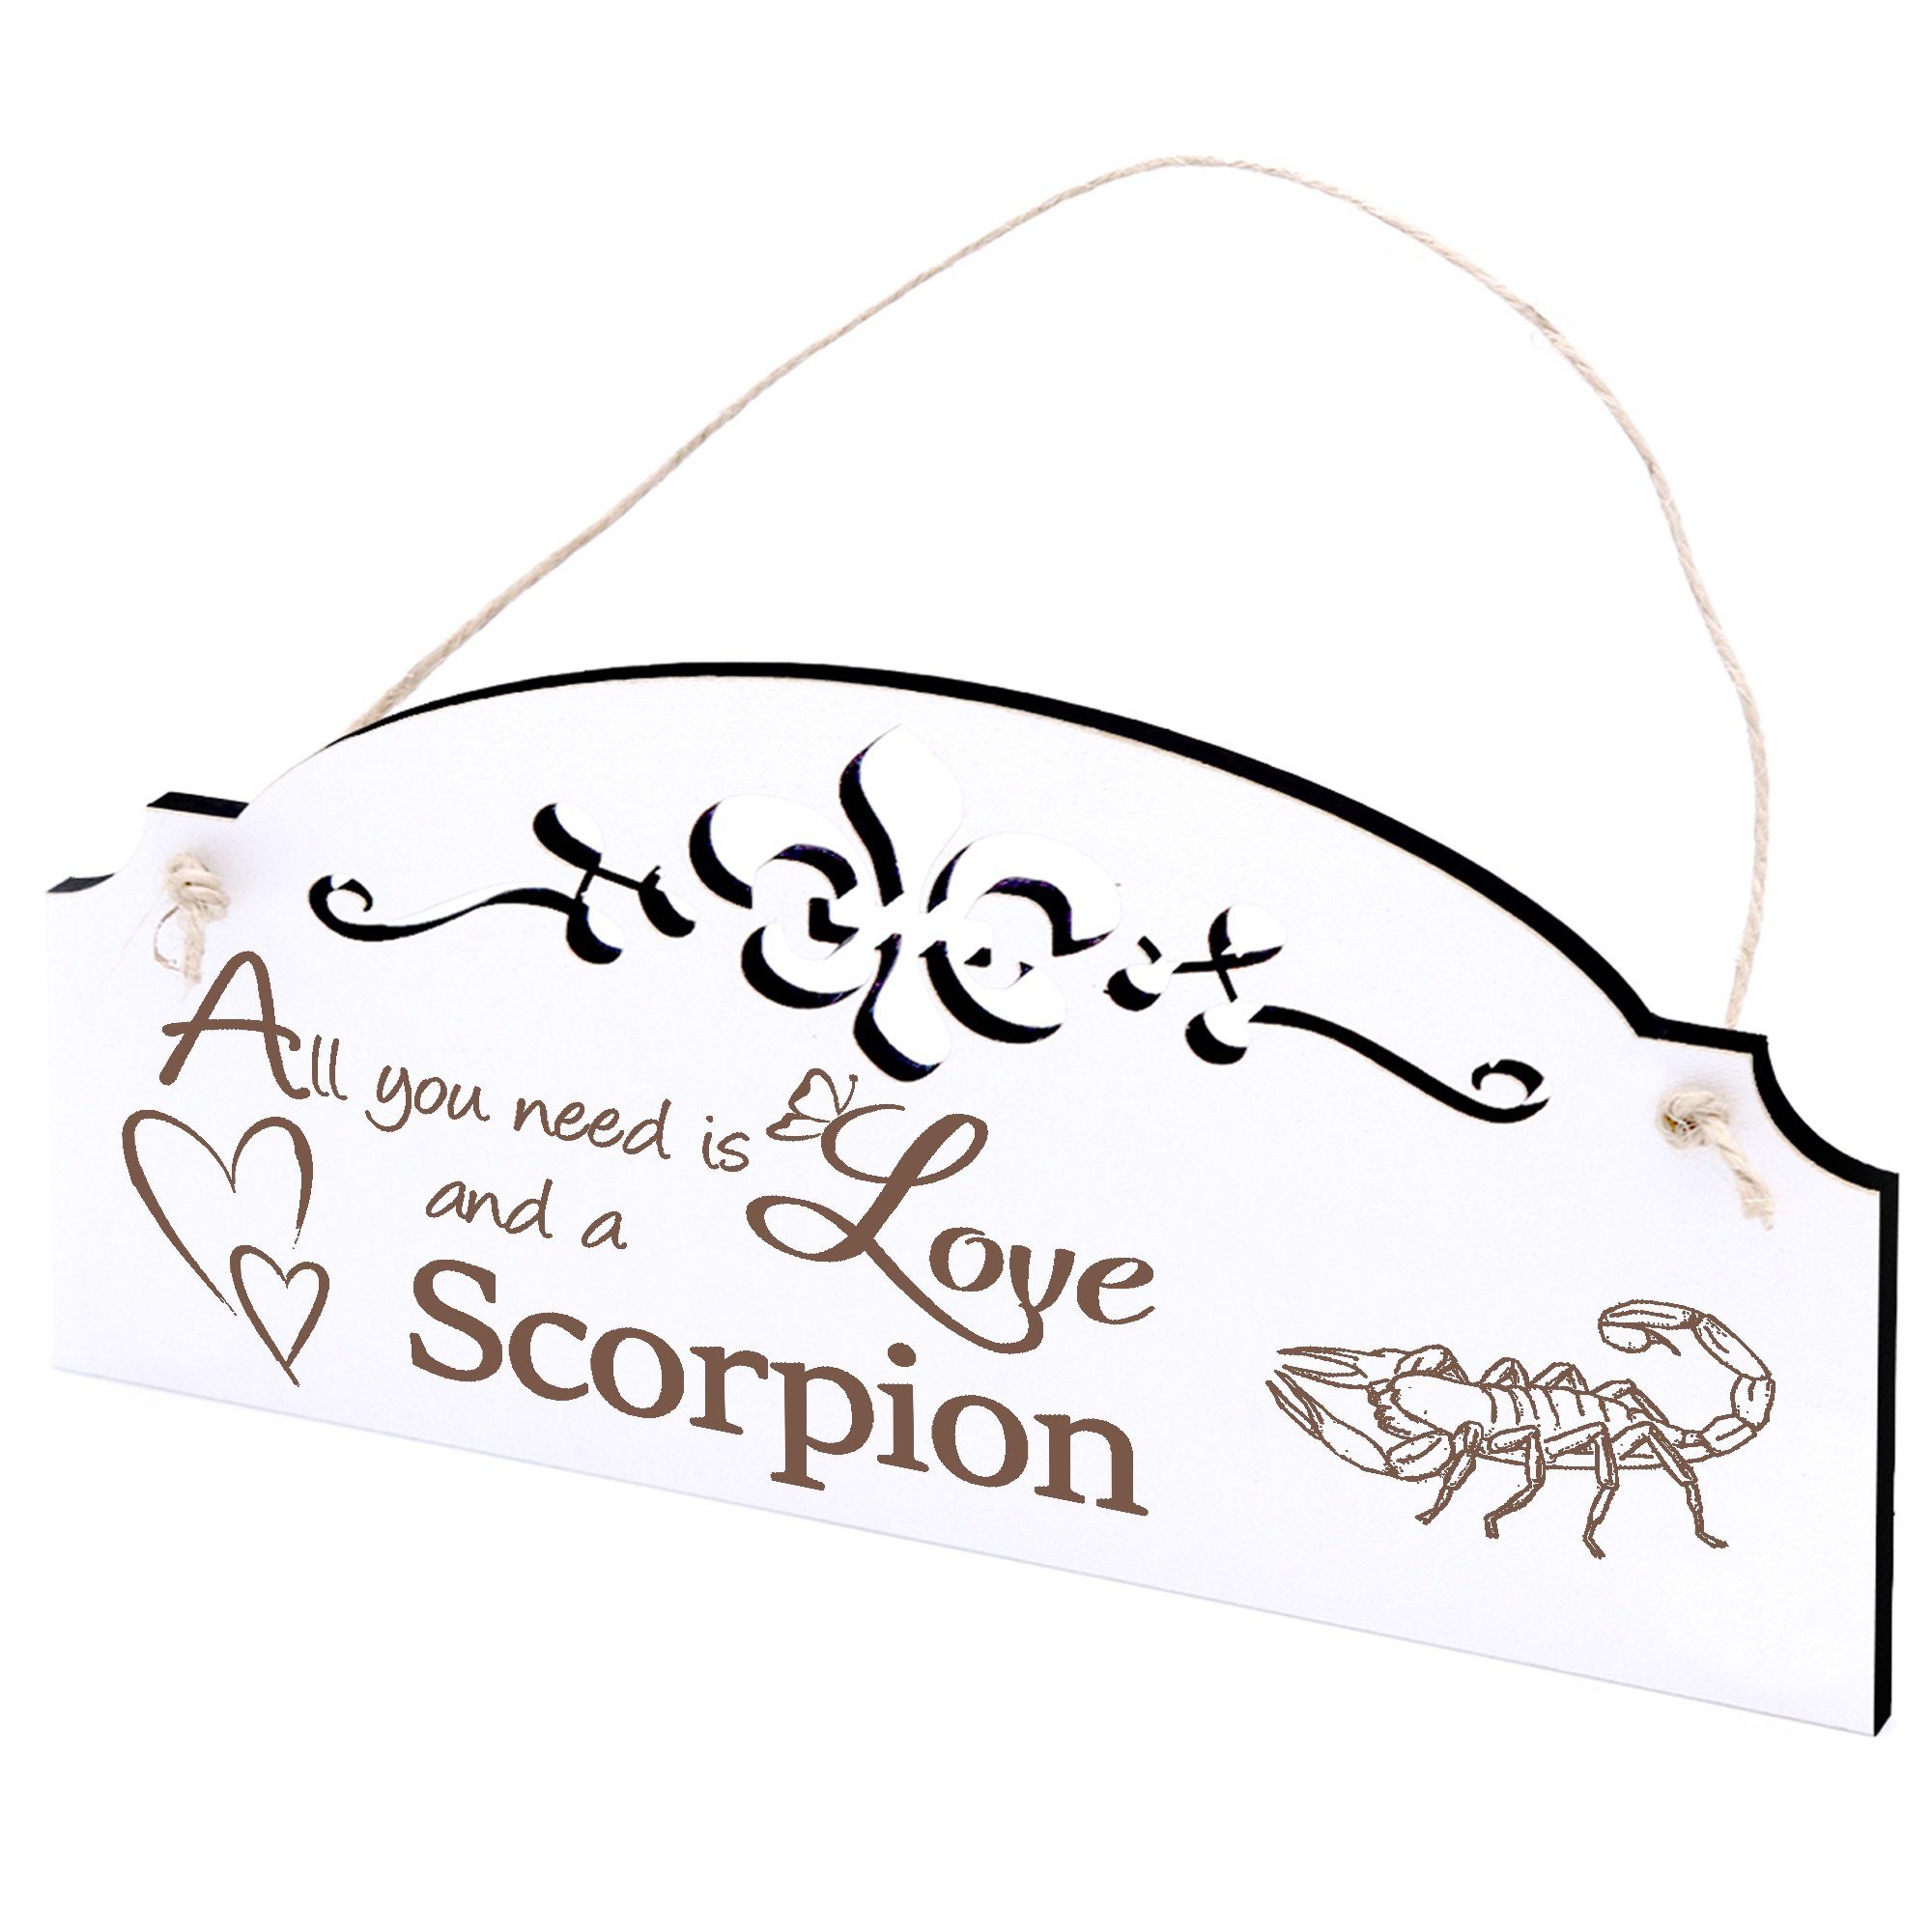 Love 20x10cm Dekolando Hängedekoration Deko All is you Skorpion need